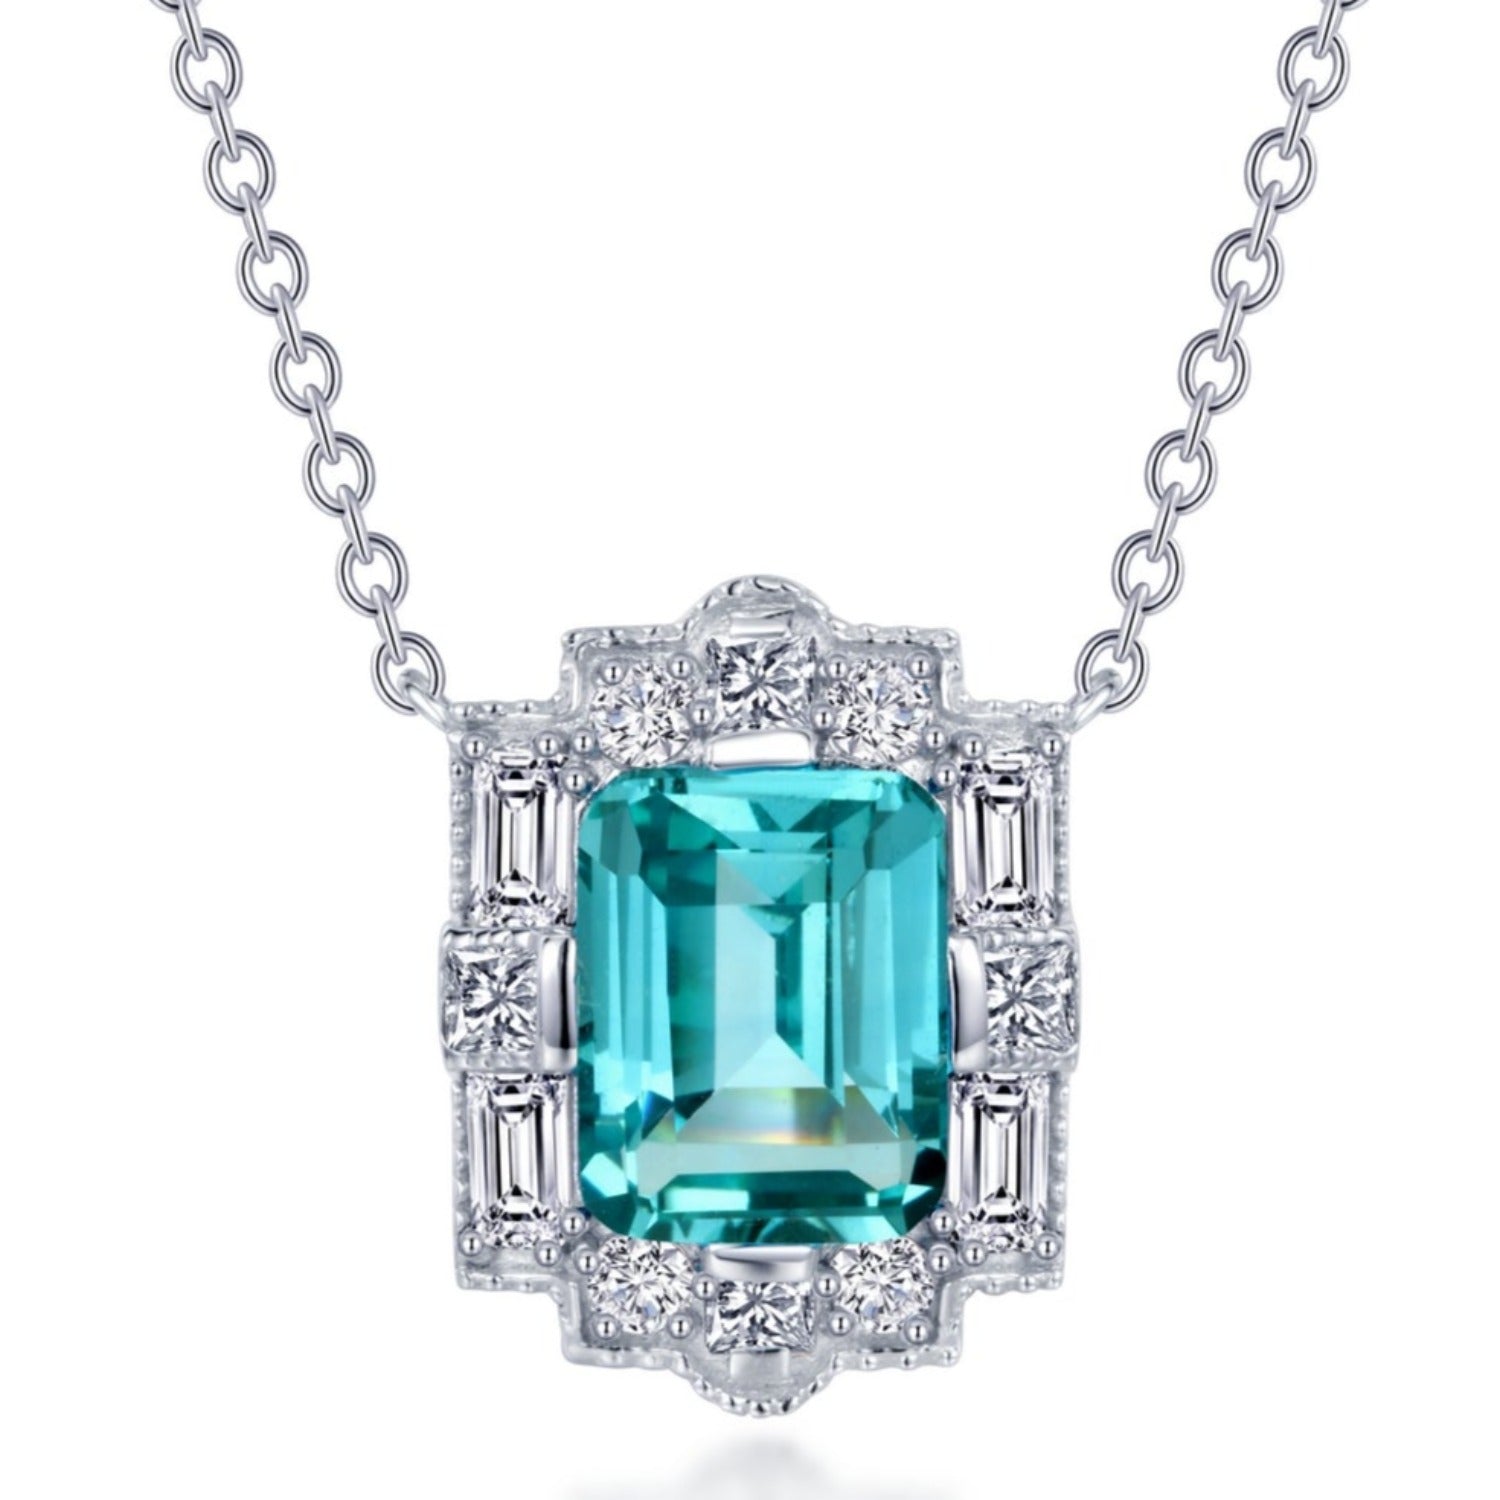 East-West Oval Teal Montana Sapphire Necklace with Diamond Halo | Angara